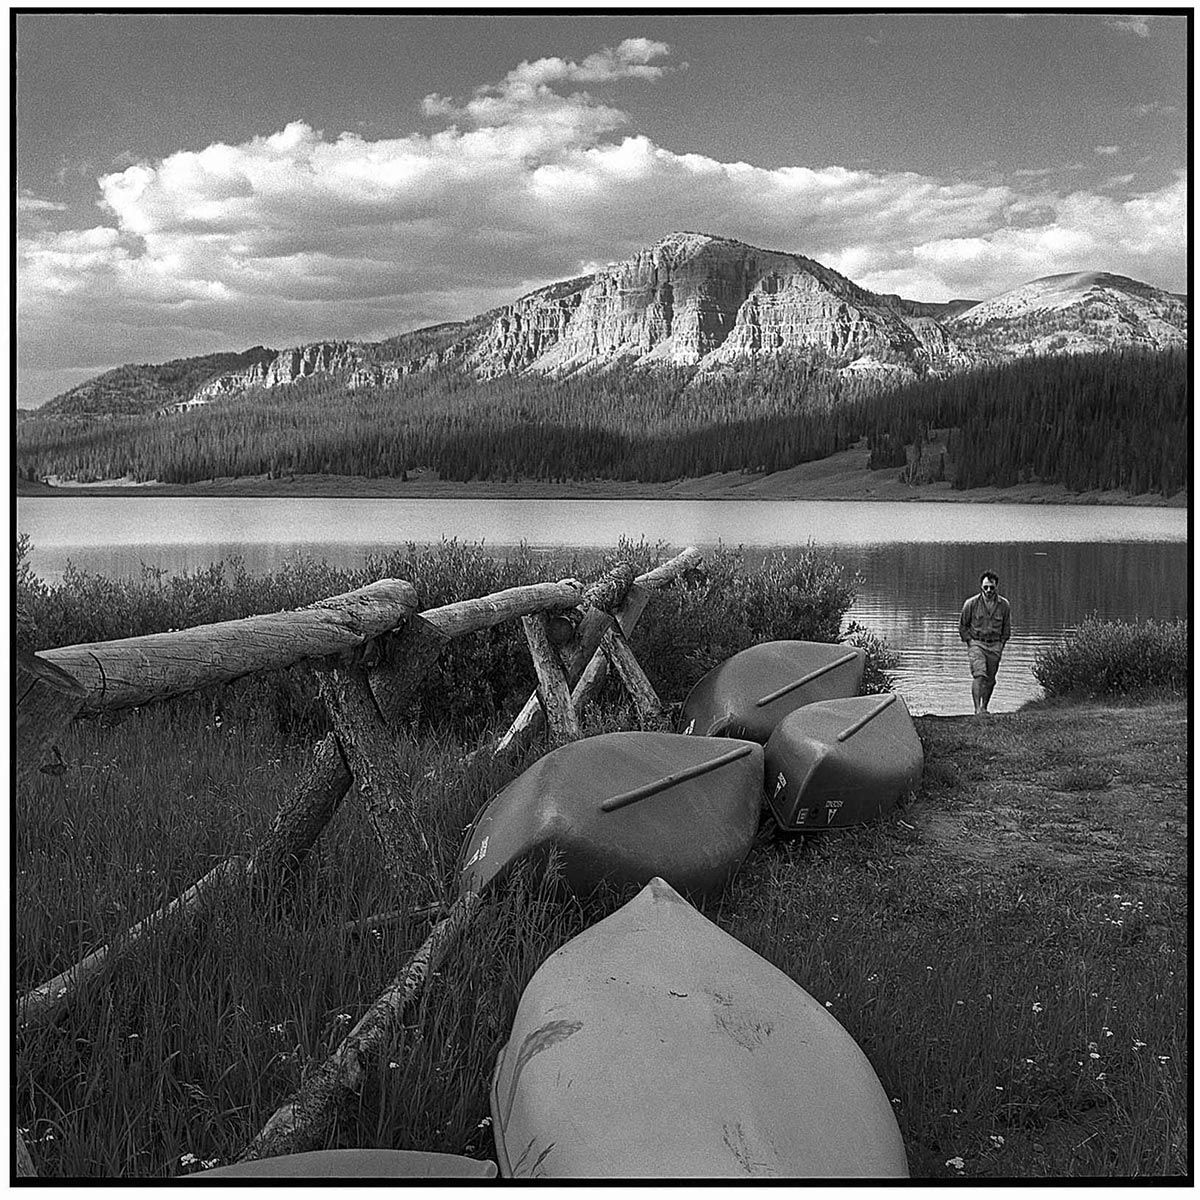 Books Lake, Wyoming, Dubois, Shoshone National Forest, b&w film, Stephen Collector, James Roditi